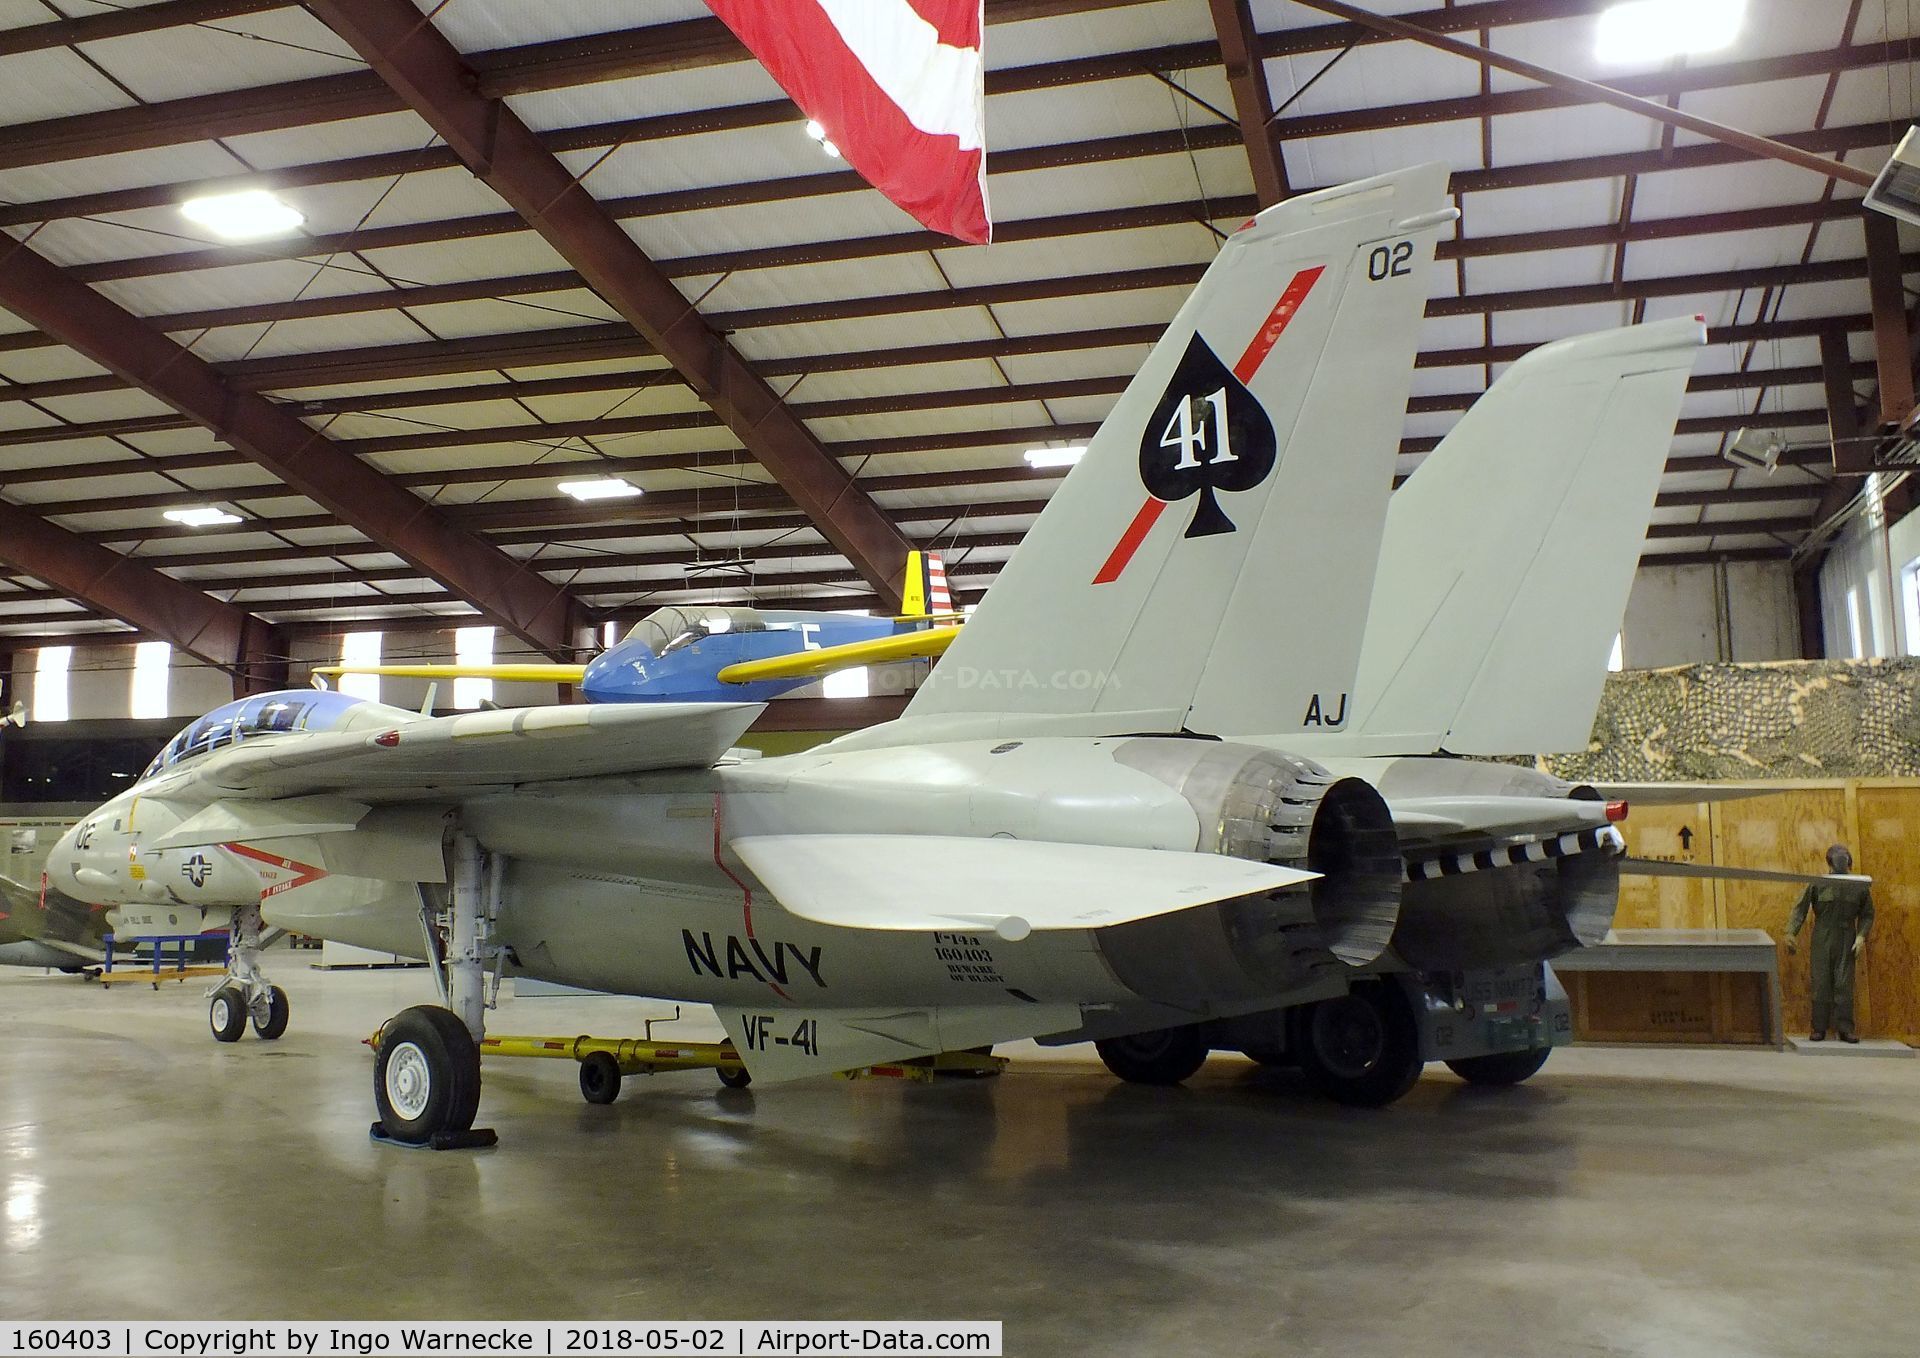 160403, Grumman F-14A Tomcat C/N 259, Grumman F-14A Tomcat at the Midland Army Air Field Museum, Midland TX